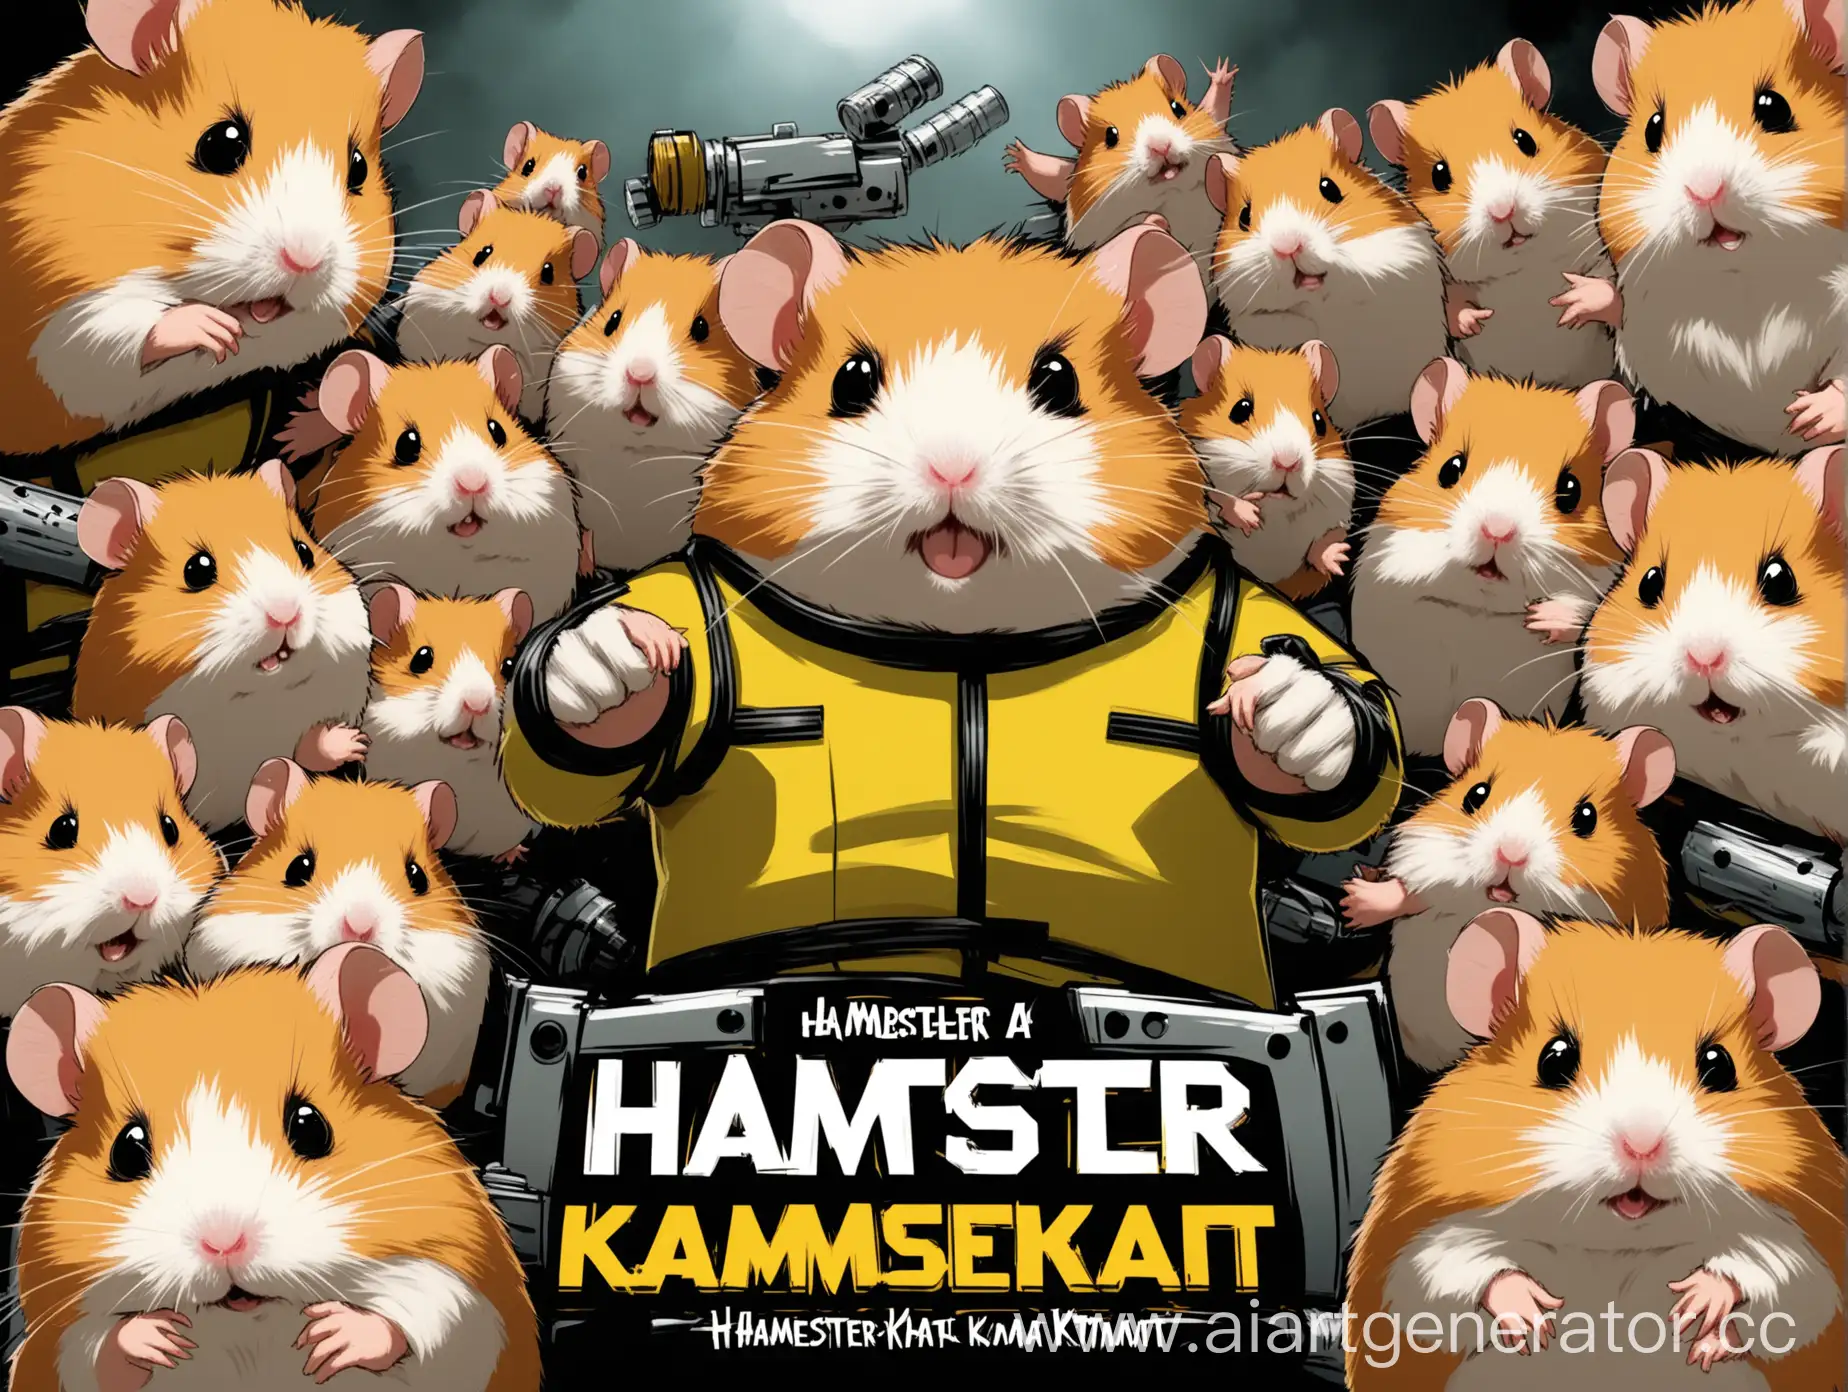 Обложка фильма про зомяка под названием Hamster Kombat